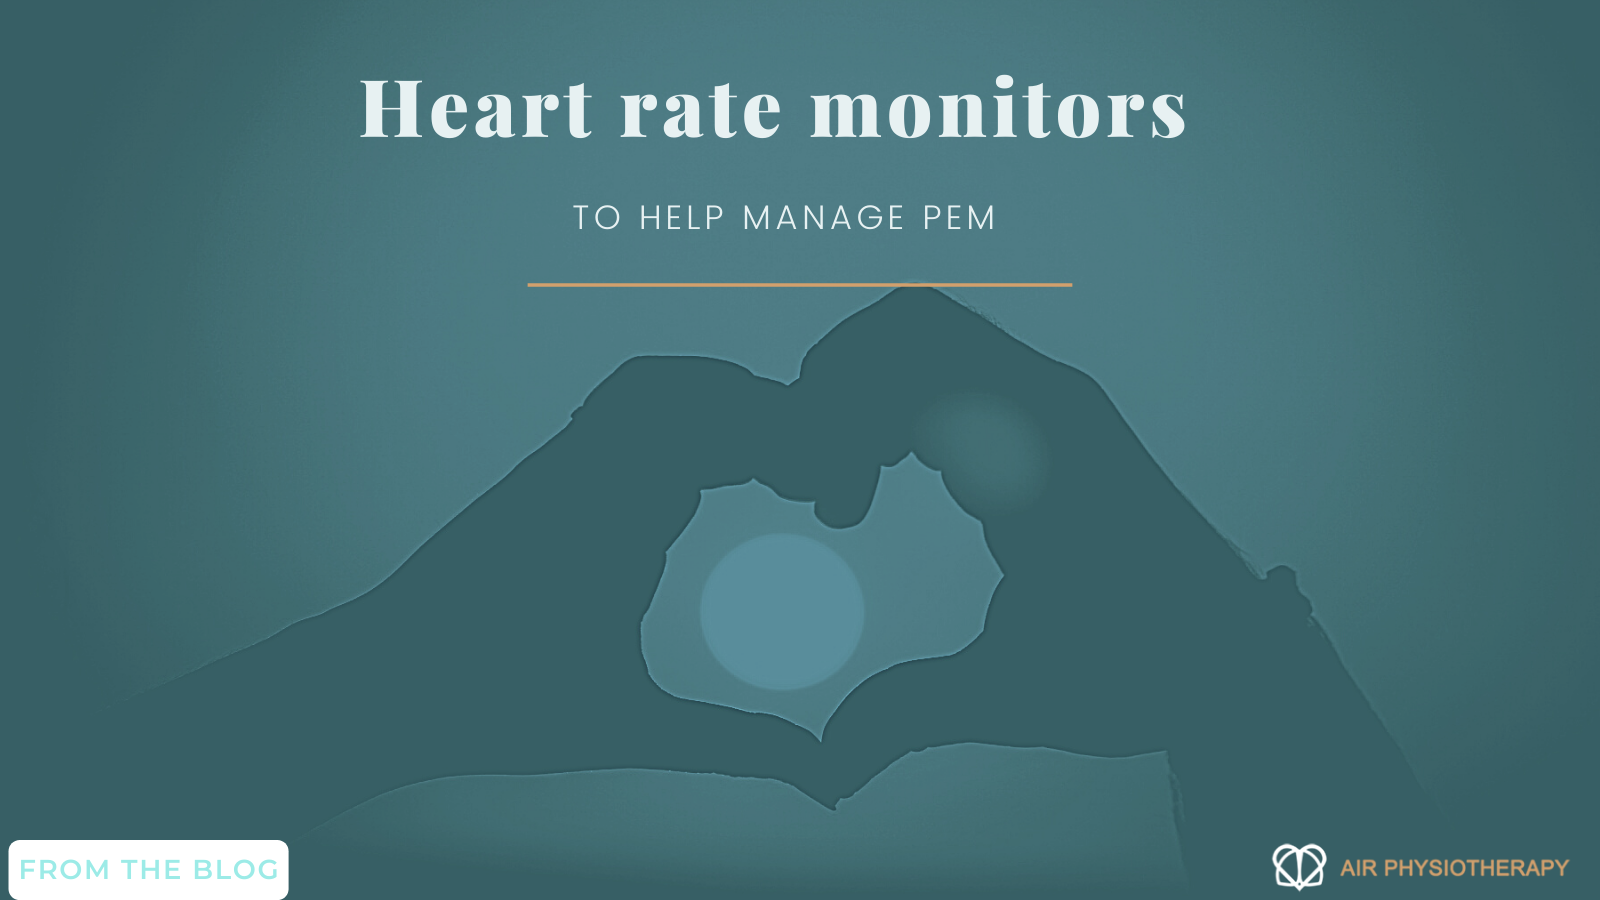 Heart rate monitors